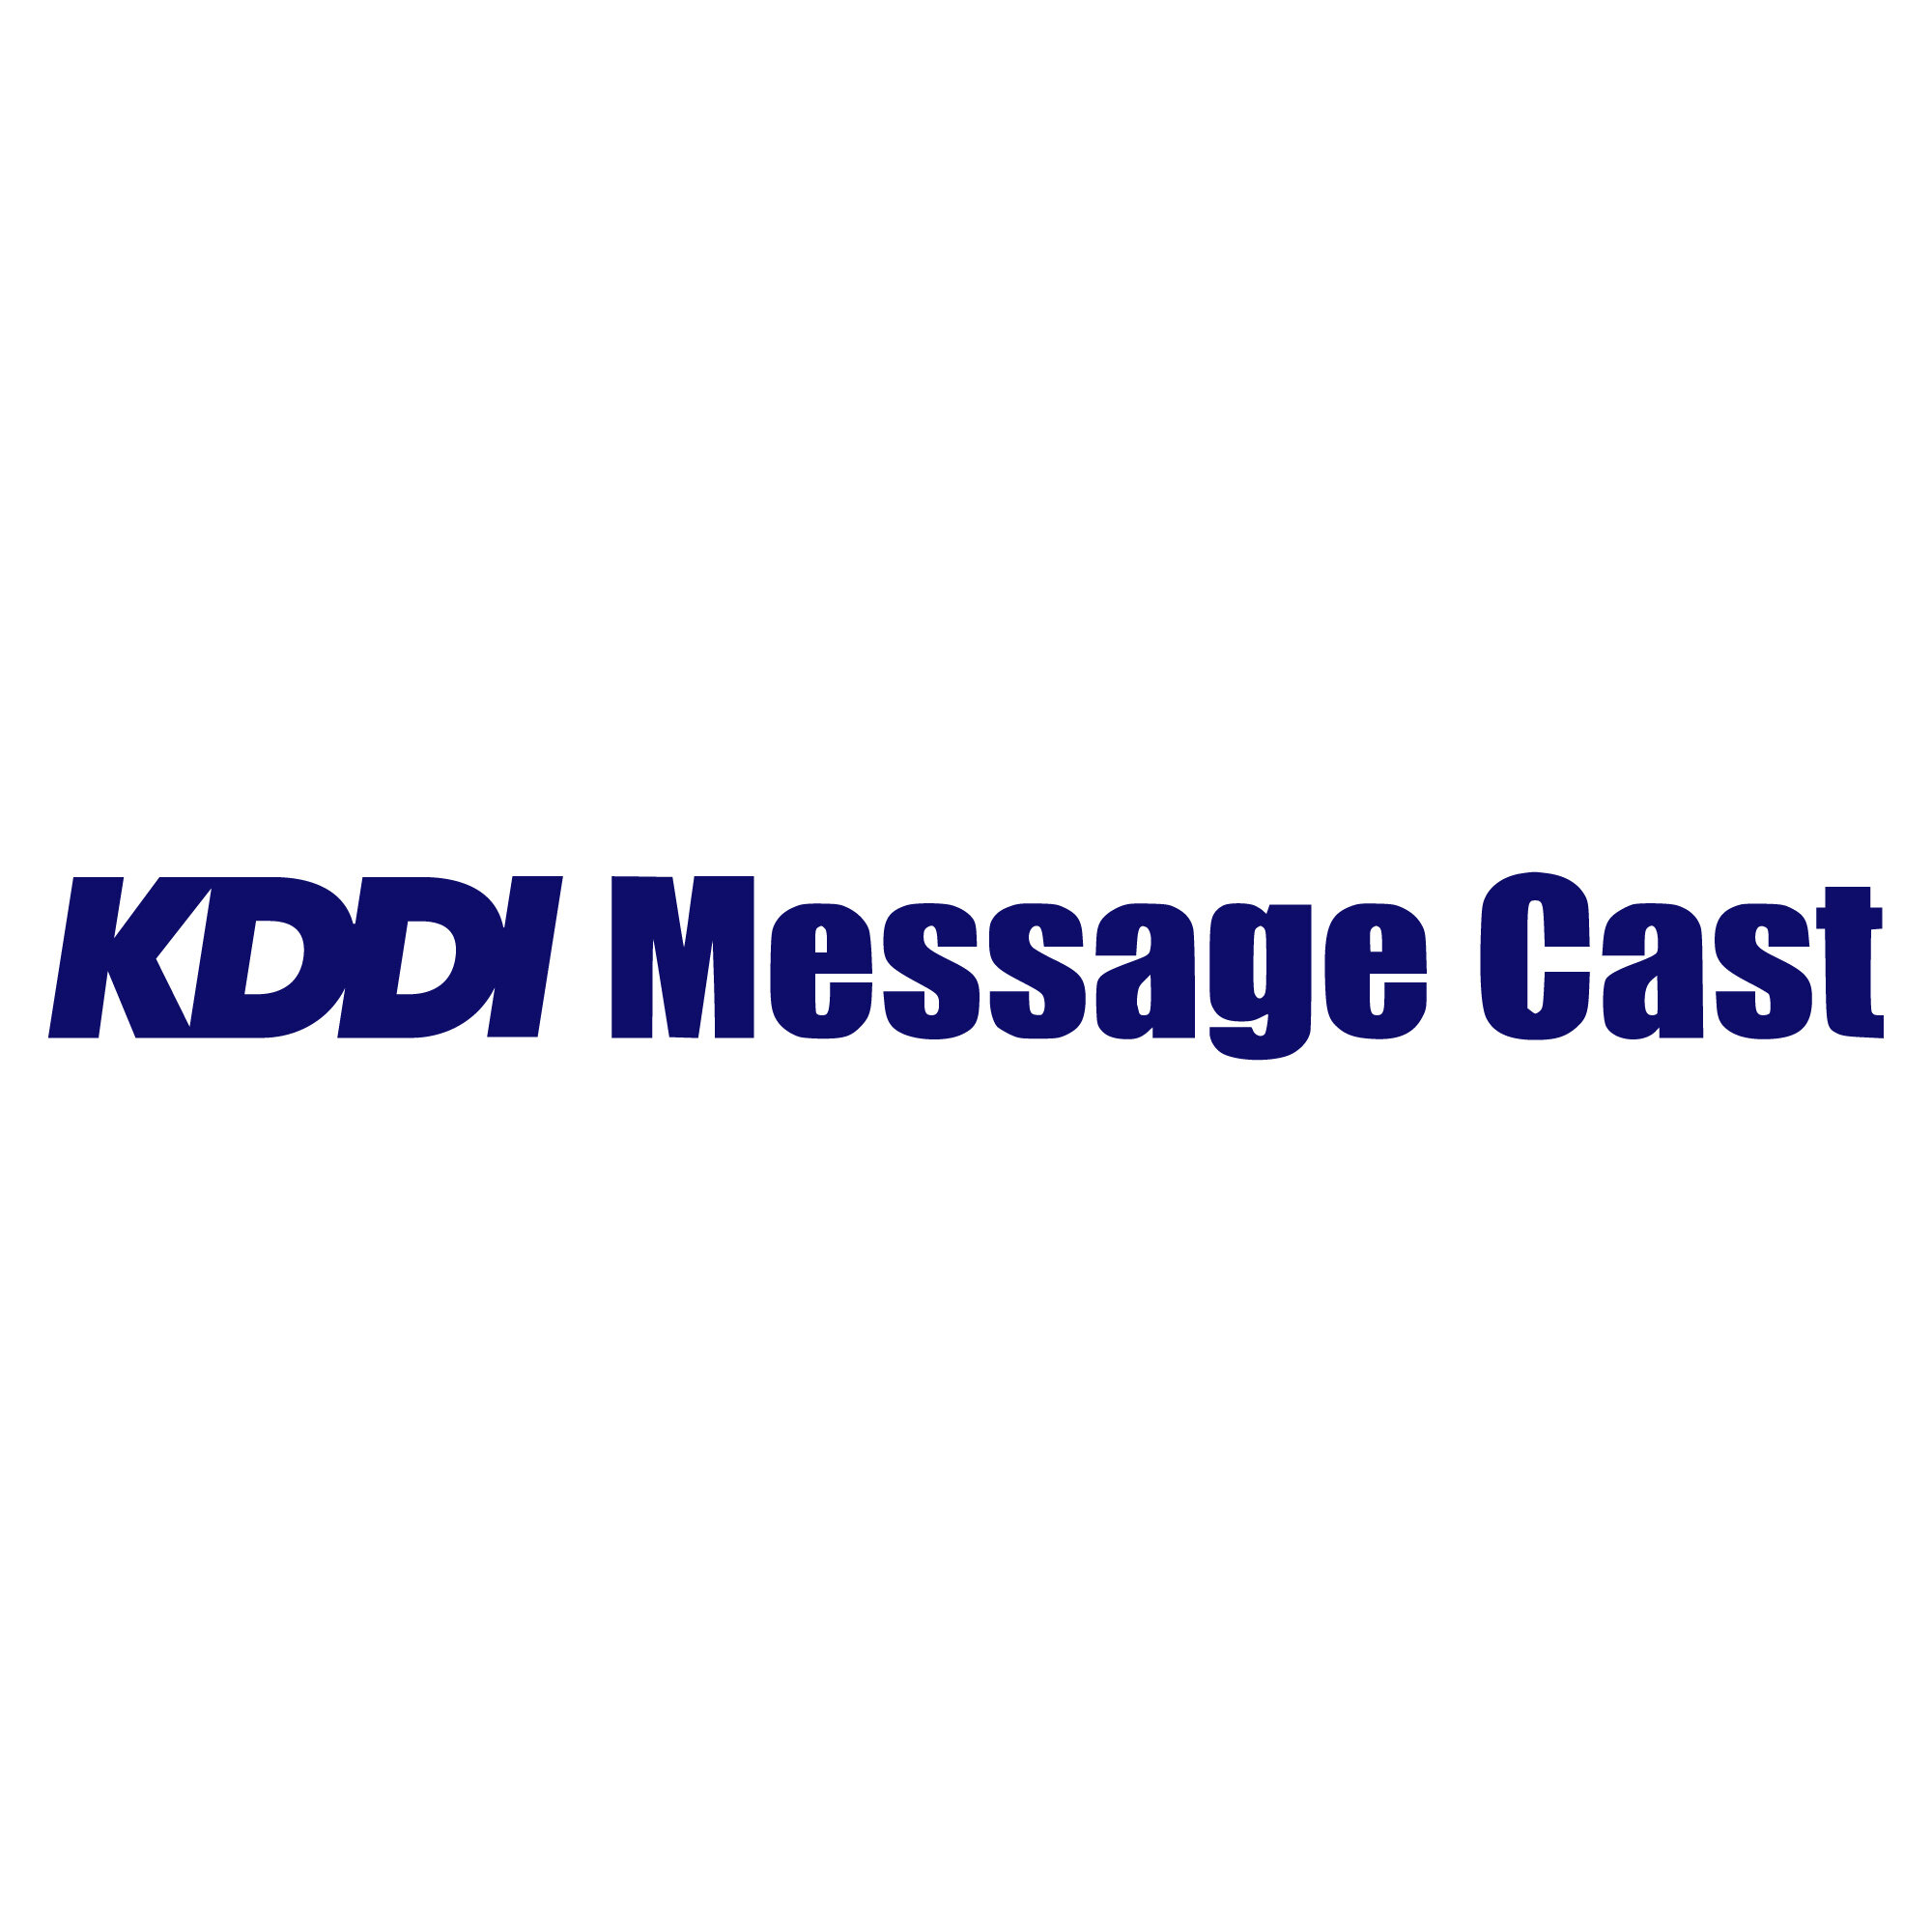 KDDI Message Cast